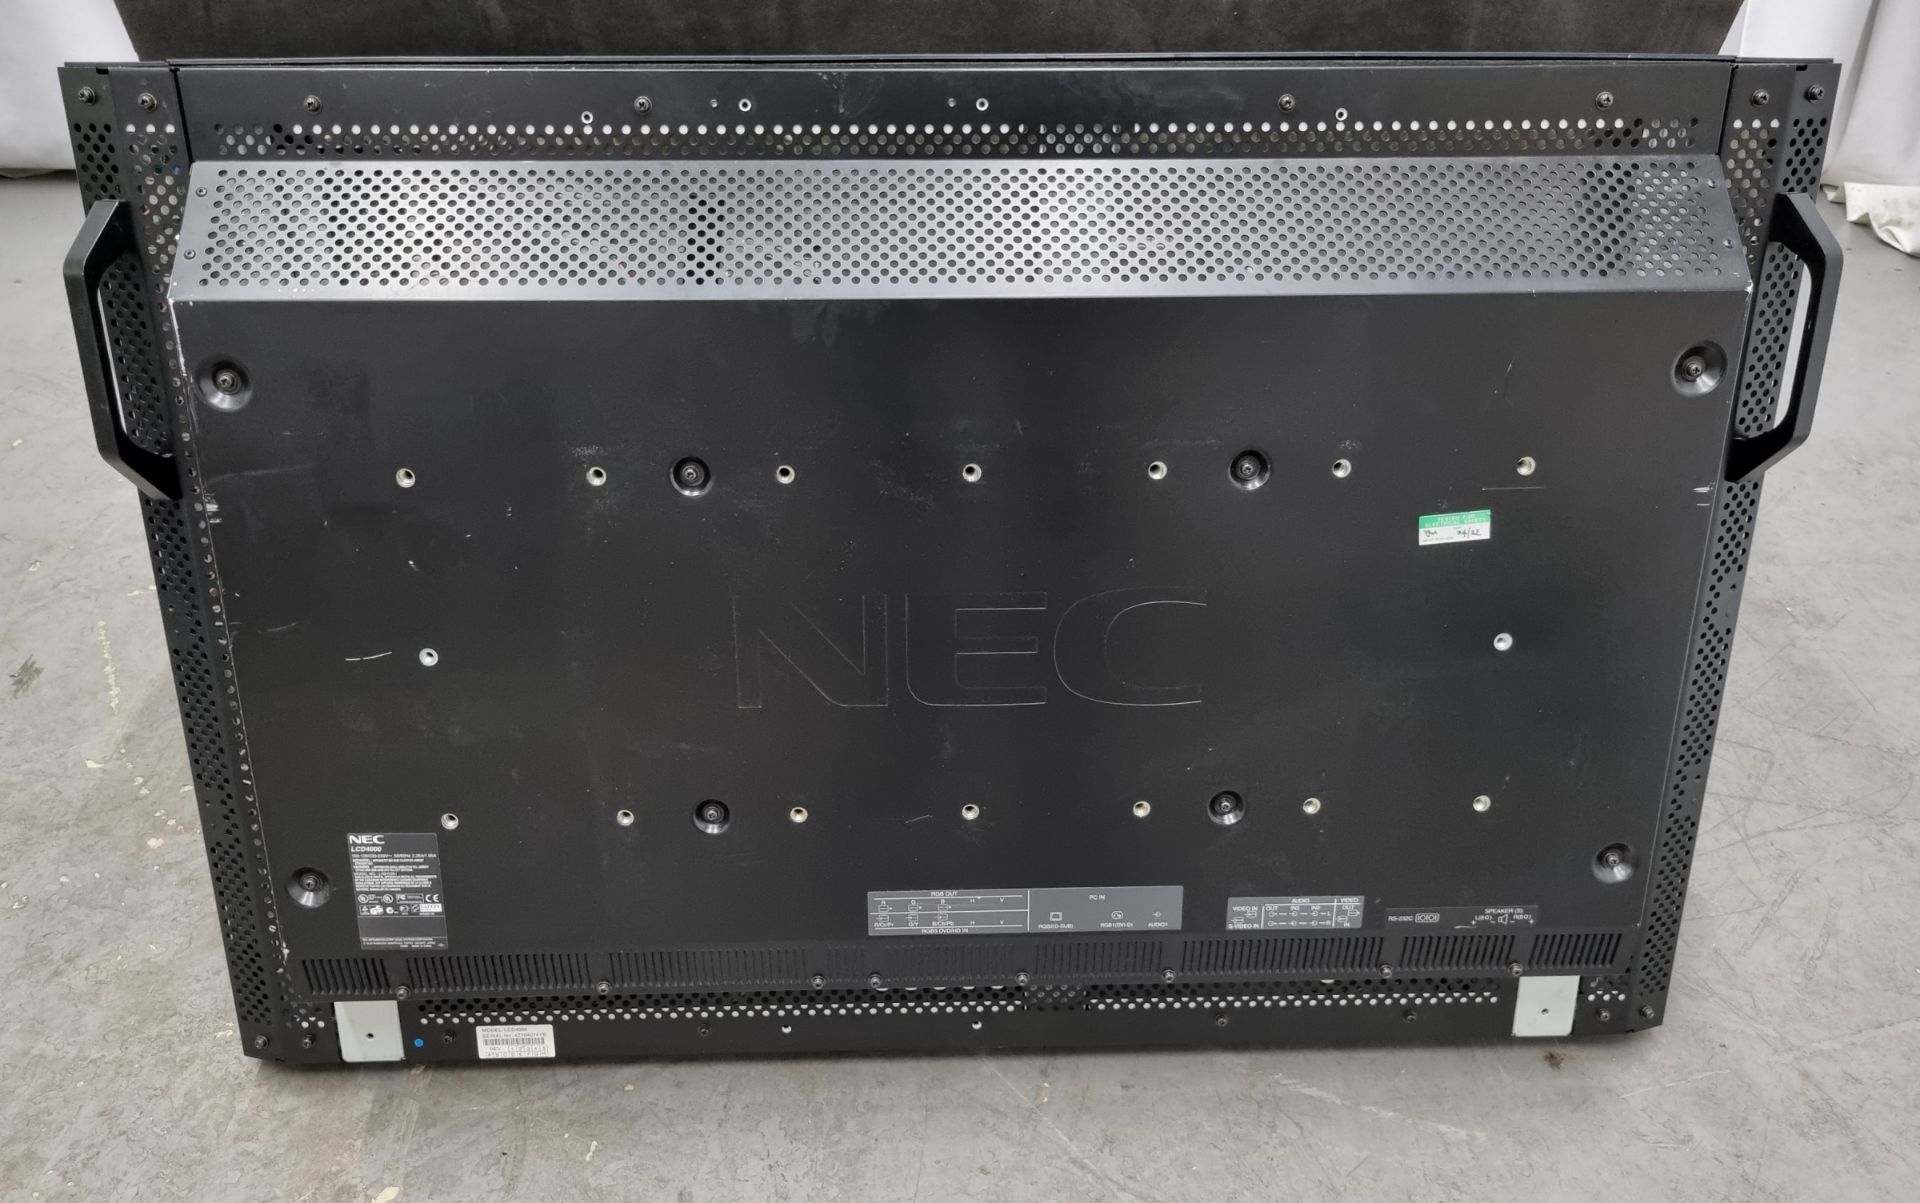 2x NEC LCD4000 40 inch Multisync professional display monitors (max resolution = 1280x768) - Image 3 of 11